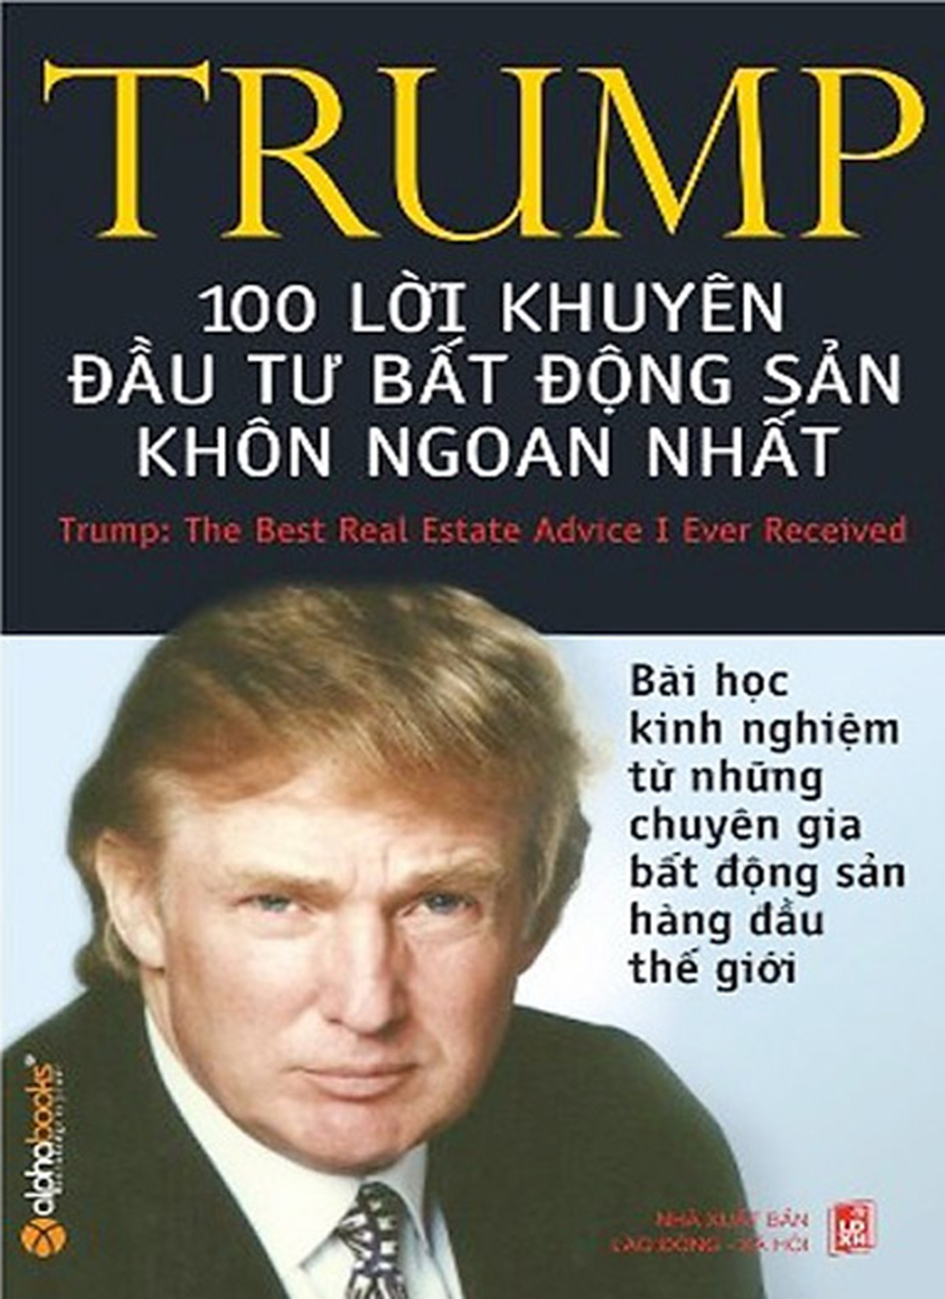 100 loi khuyen dau tu bat dong san